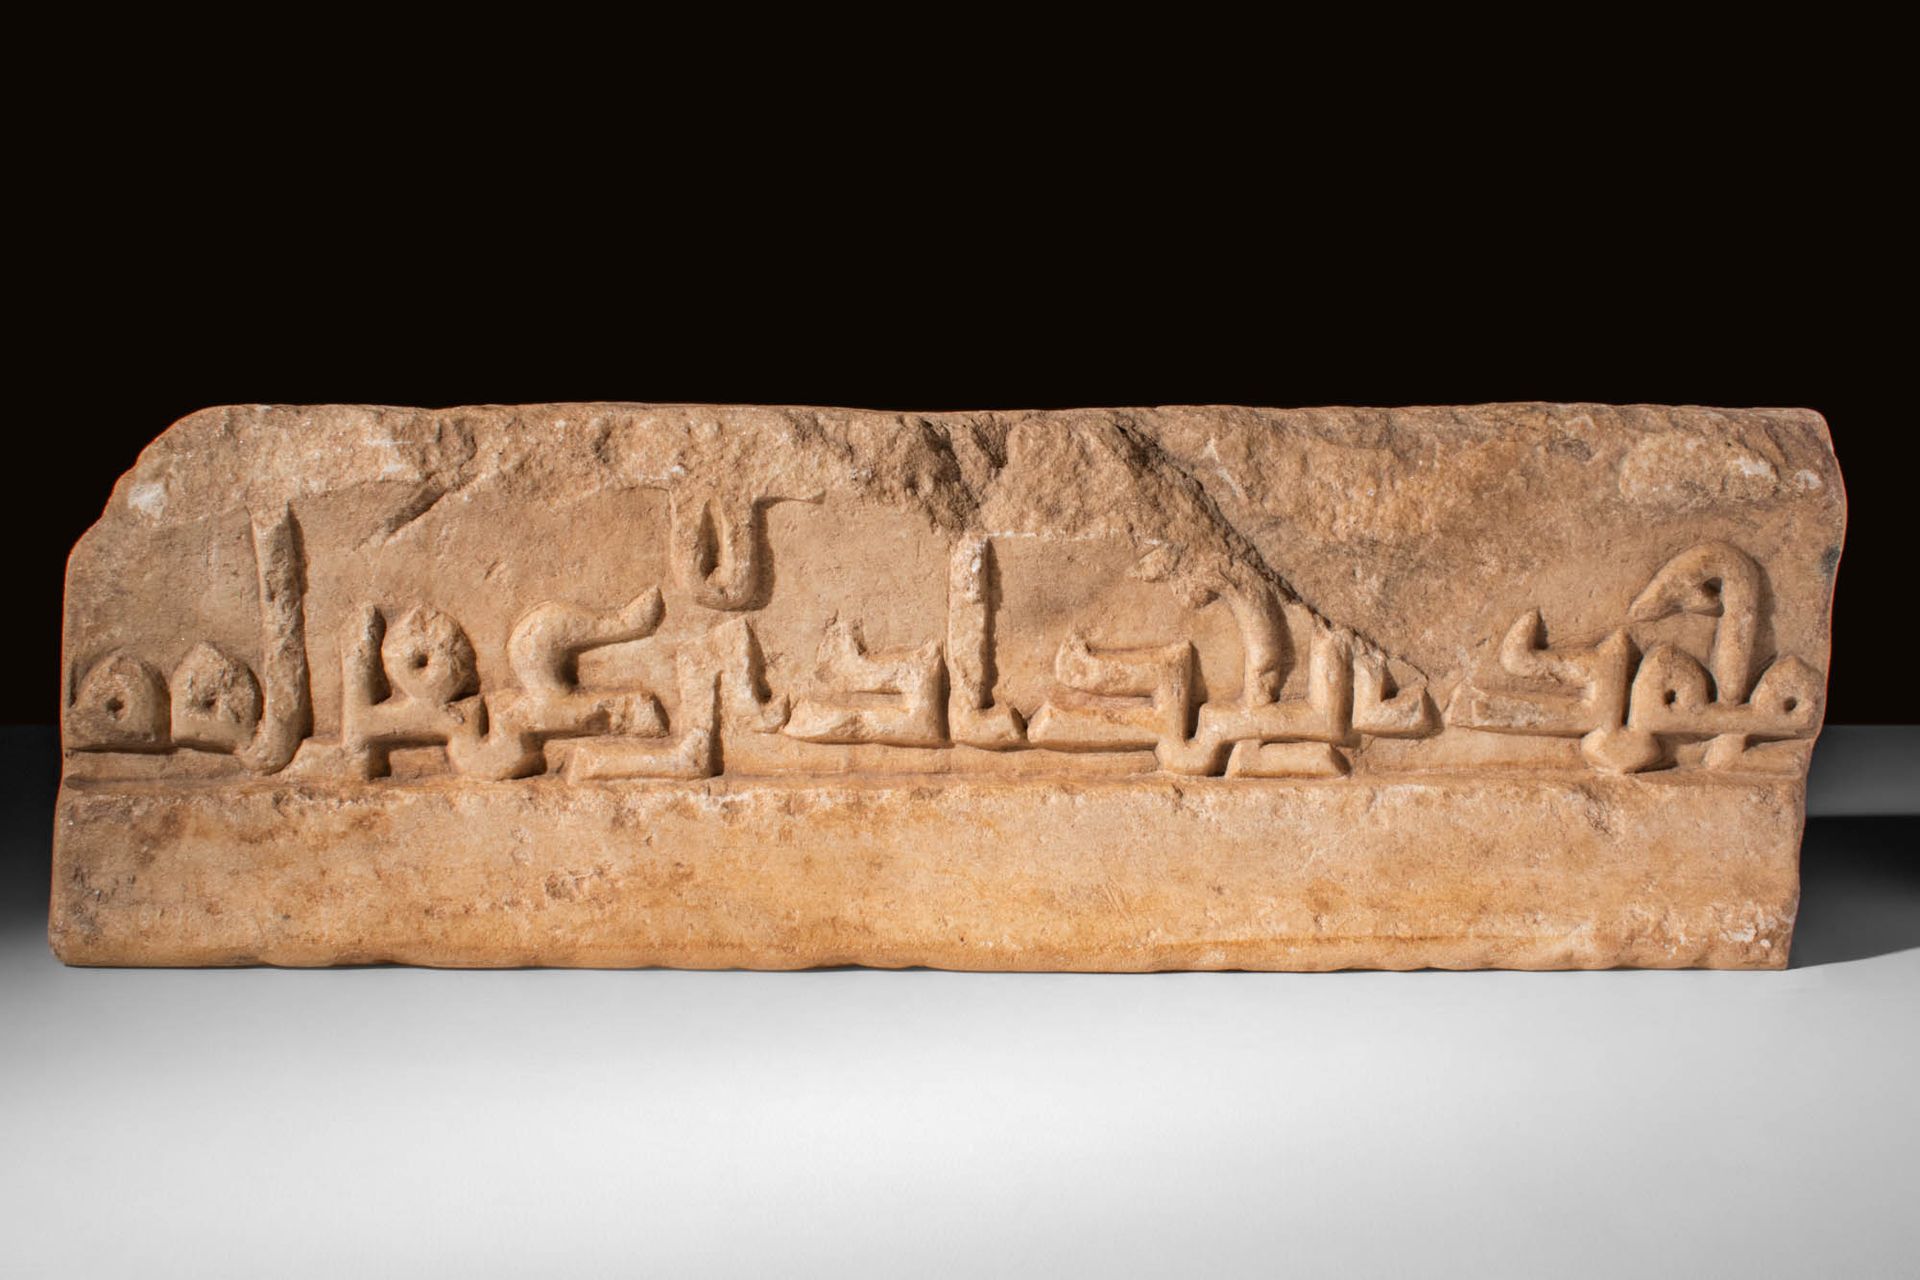 MEDIEVAL SELJUK ARCHITECTURAL INSCRIPTION Ca.约 1100-1300 年。
巨大的塞尔柱大理石建筑碑文从右至左排列。&hellip;